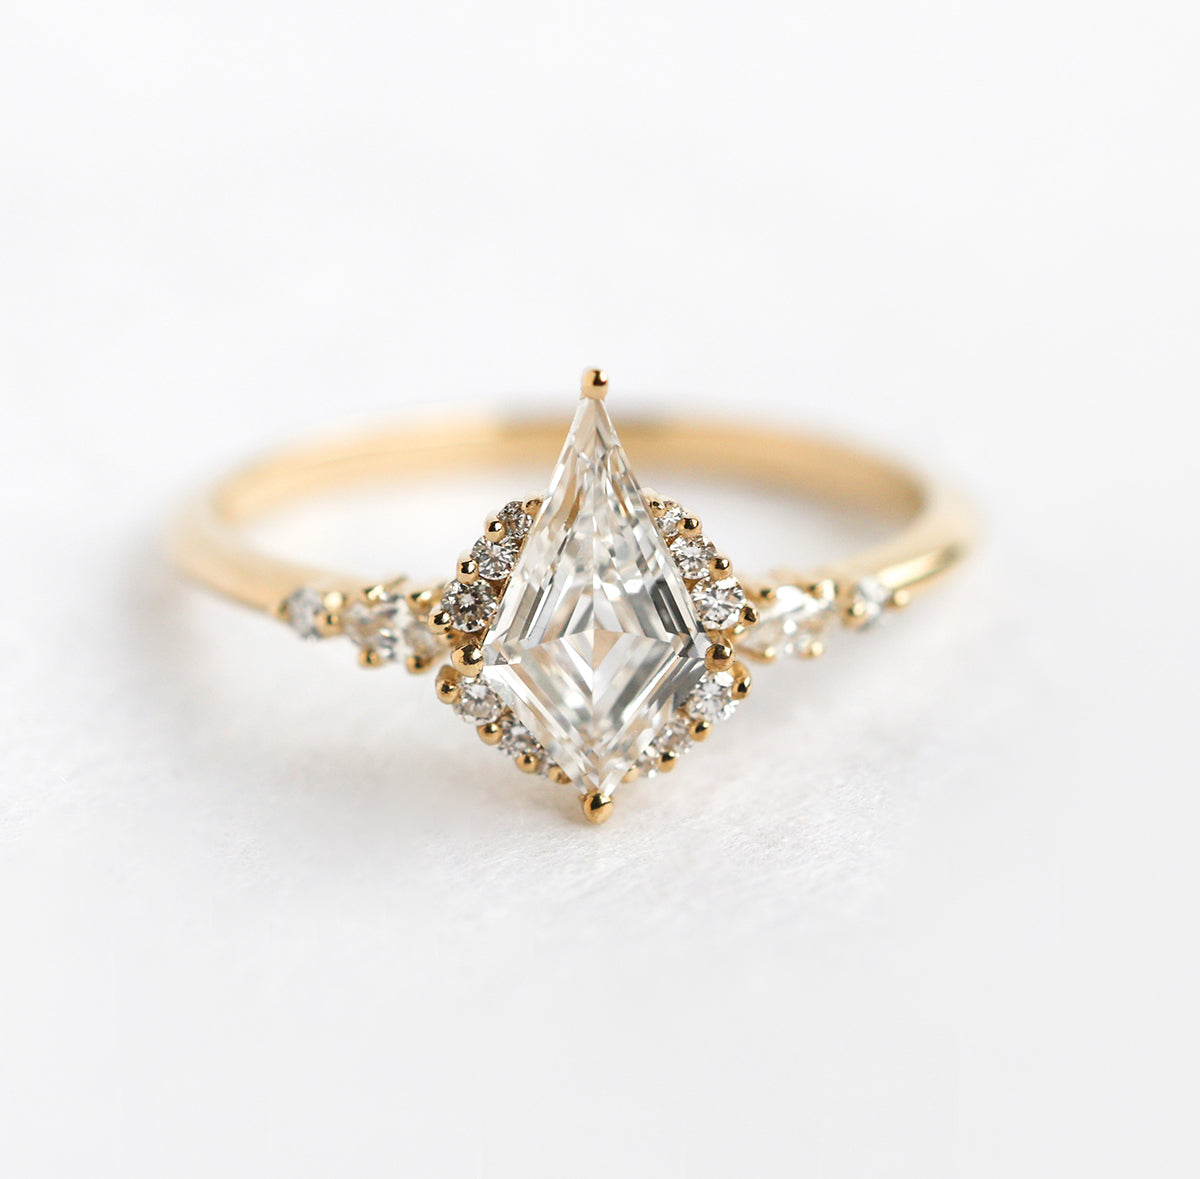 Kite-shaped white diamond engagement ring set